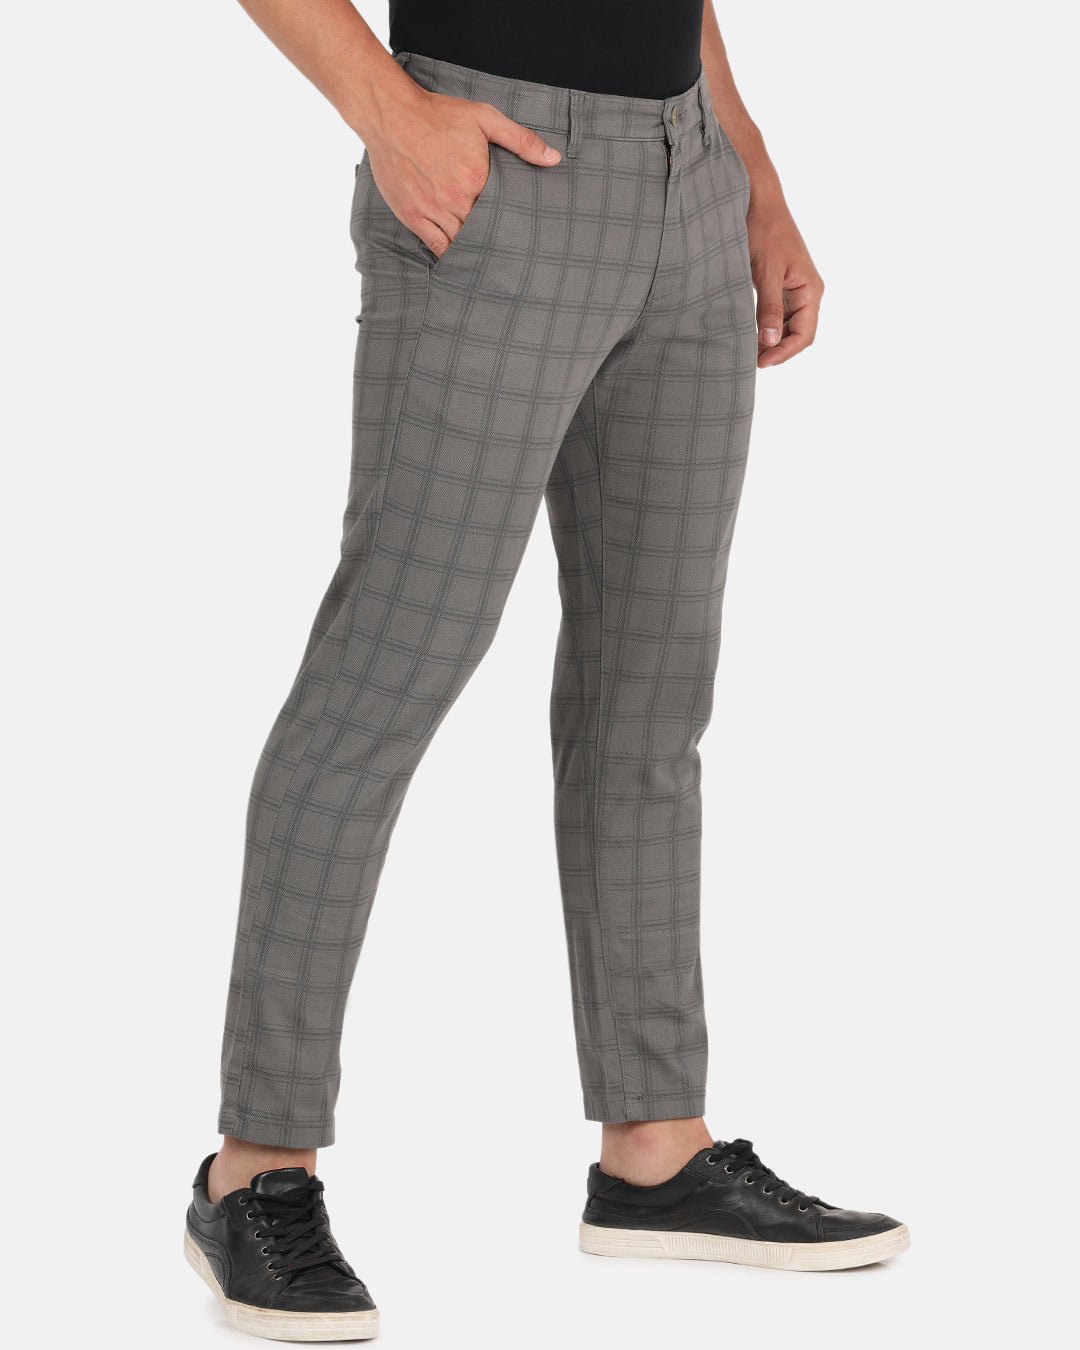 Crocodile Casual Slim Fit Printed Grey Trousers for Men